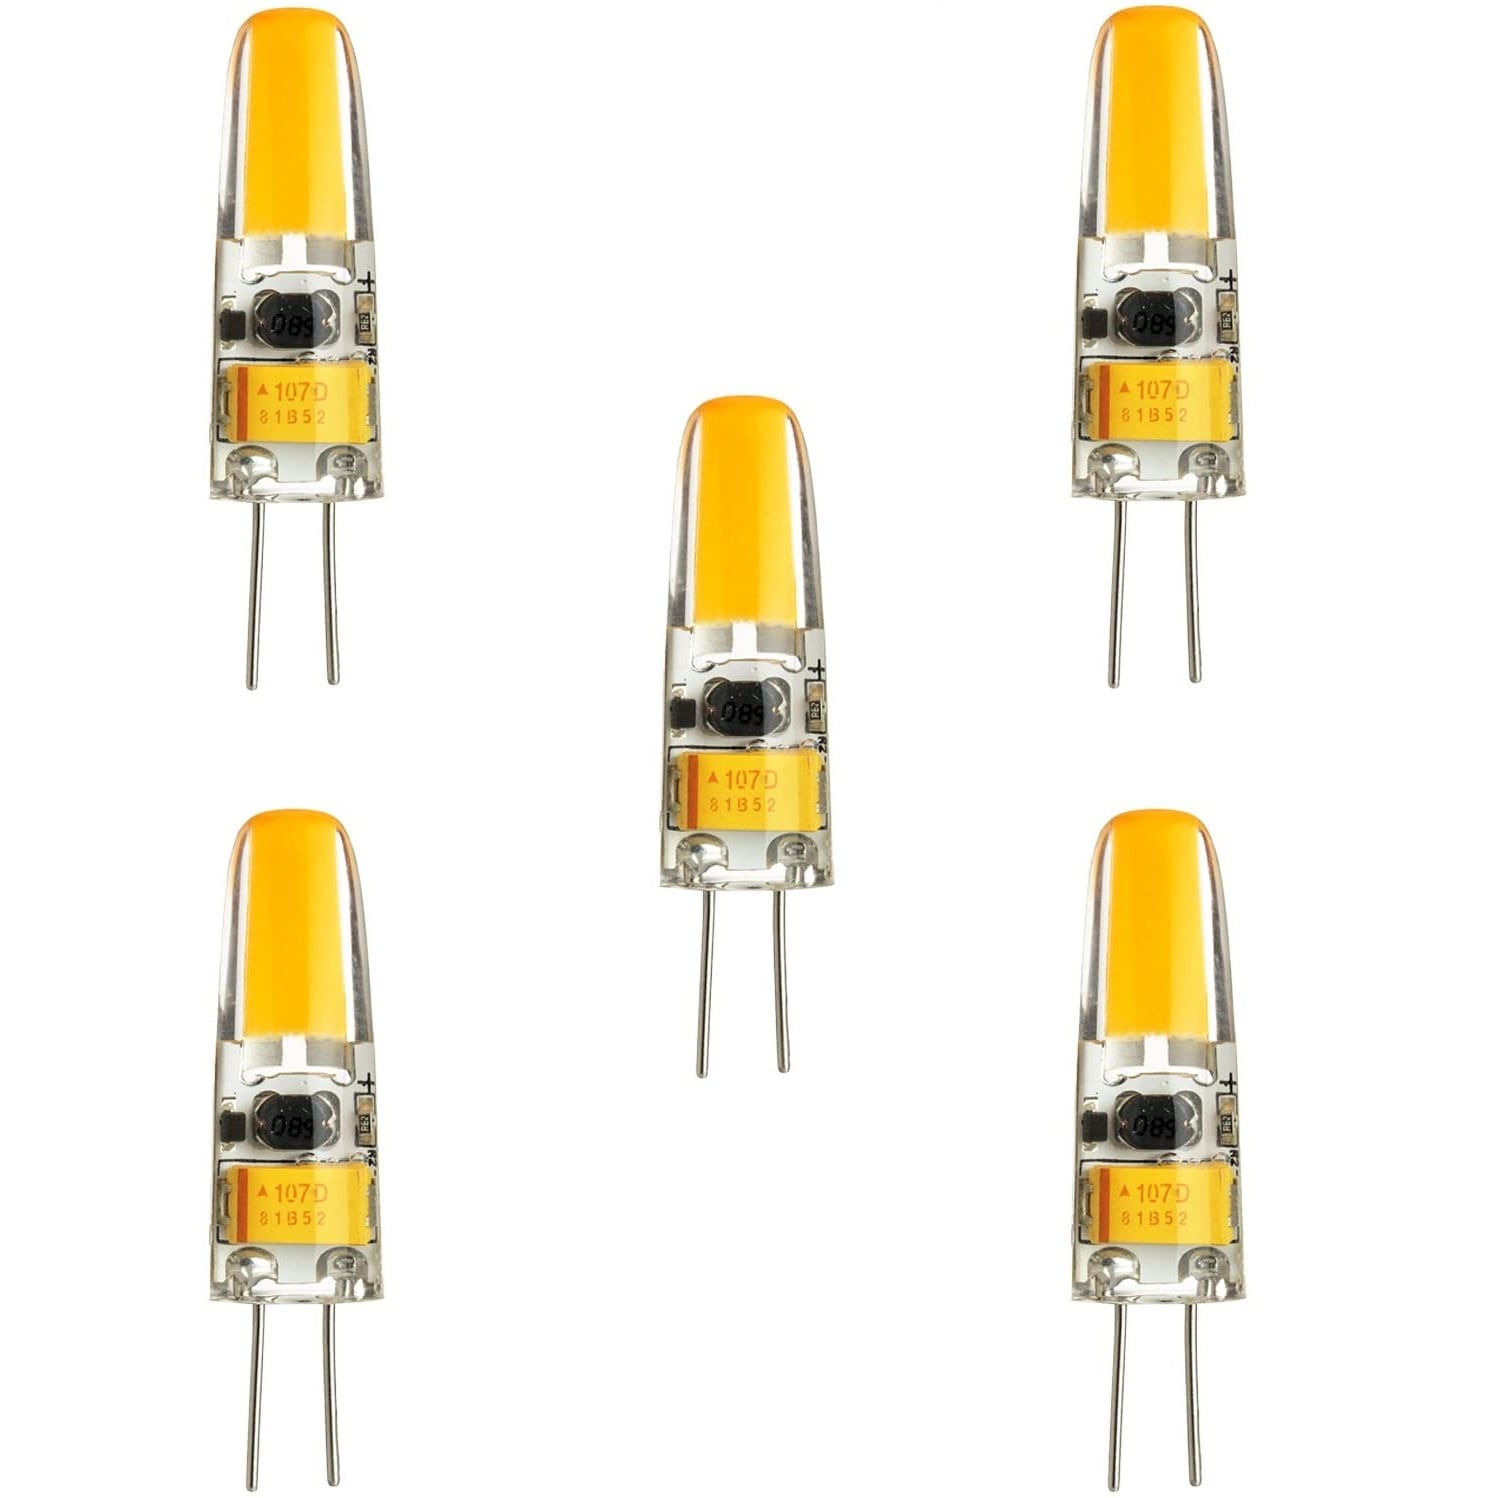 Bulb G4 6 LED 10-30V - LED bulbs - MTO Nautica Store